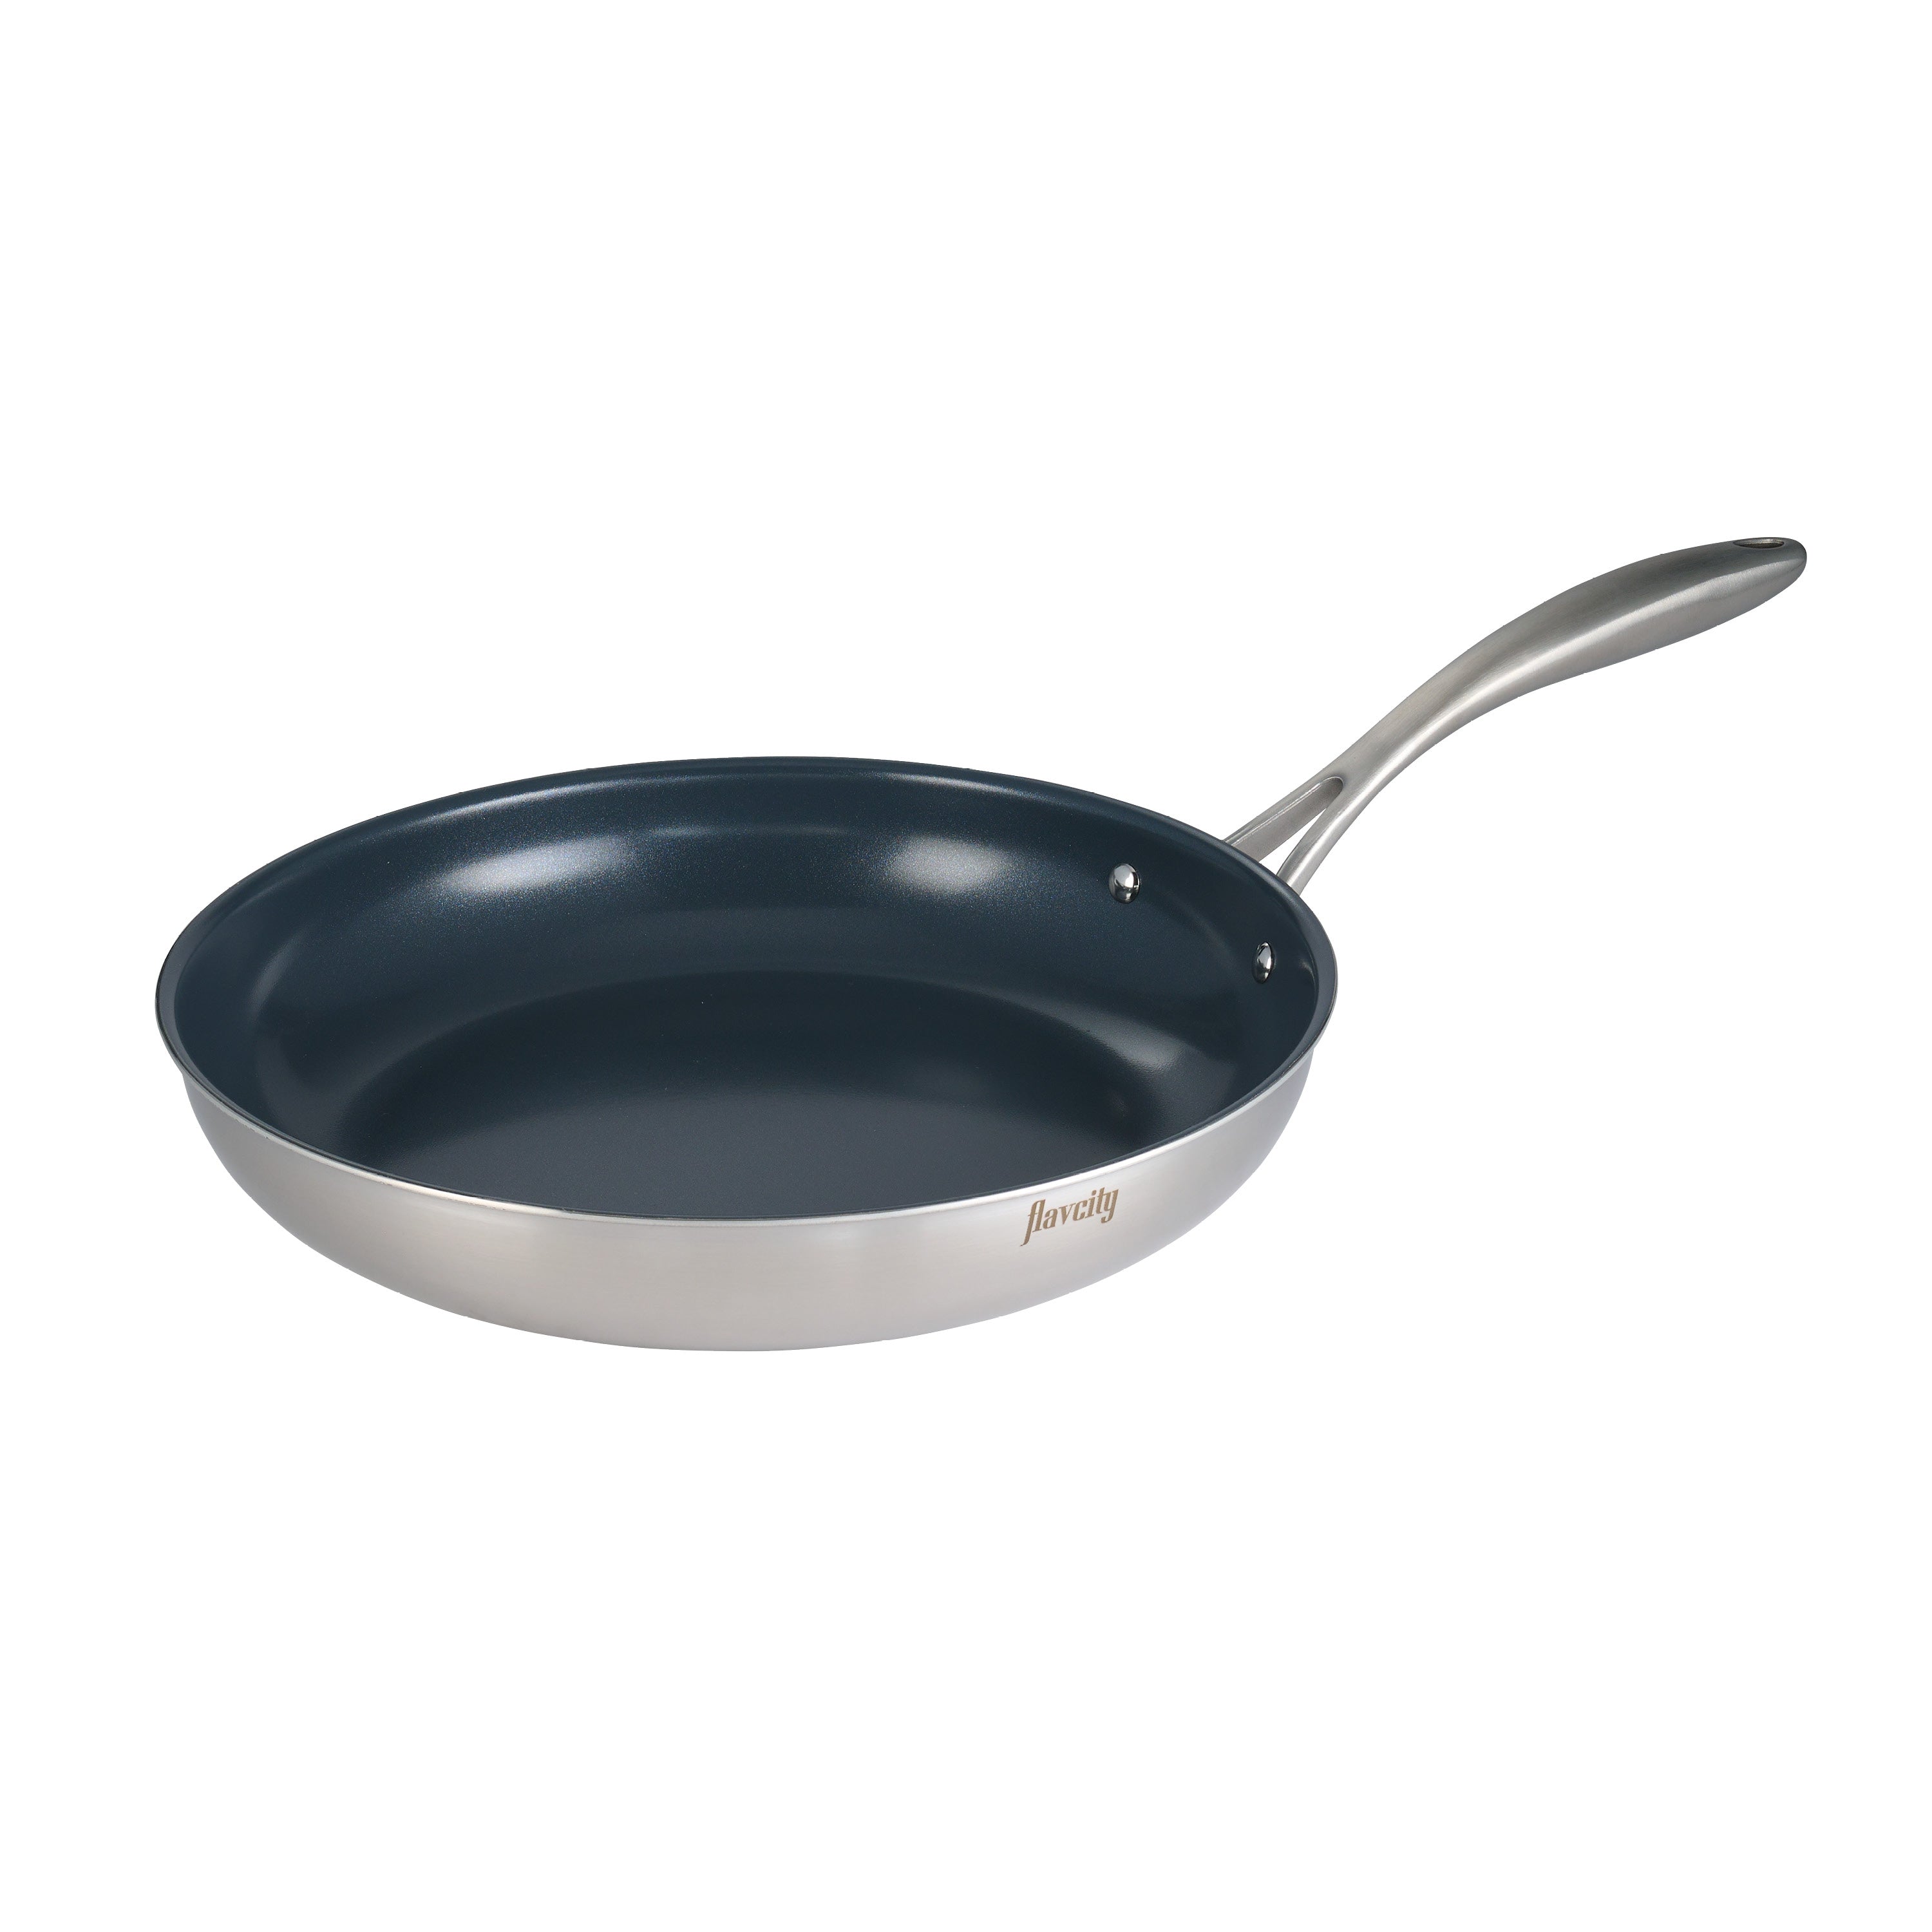 Nonstick Ceramic Saute Pan 12-Inch, Non-toxic Deep Frying Pan